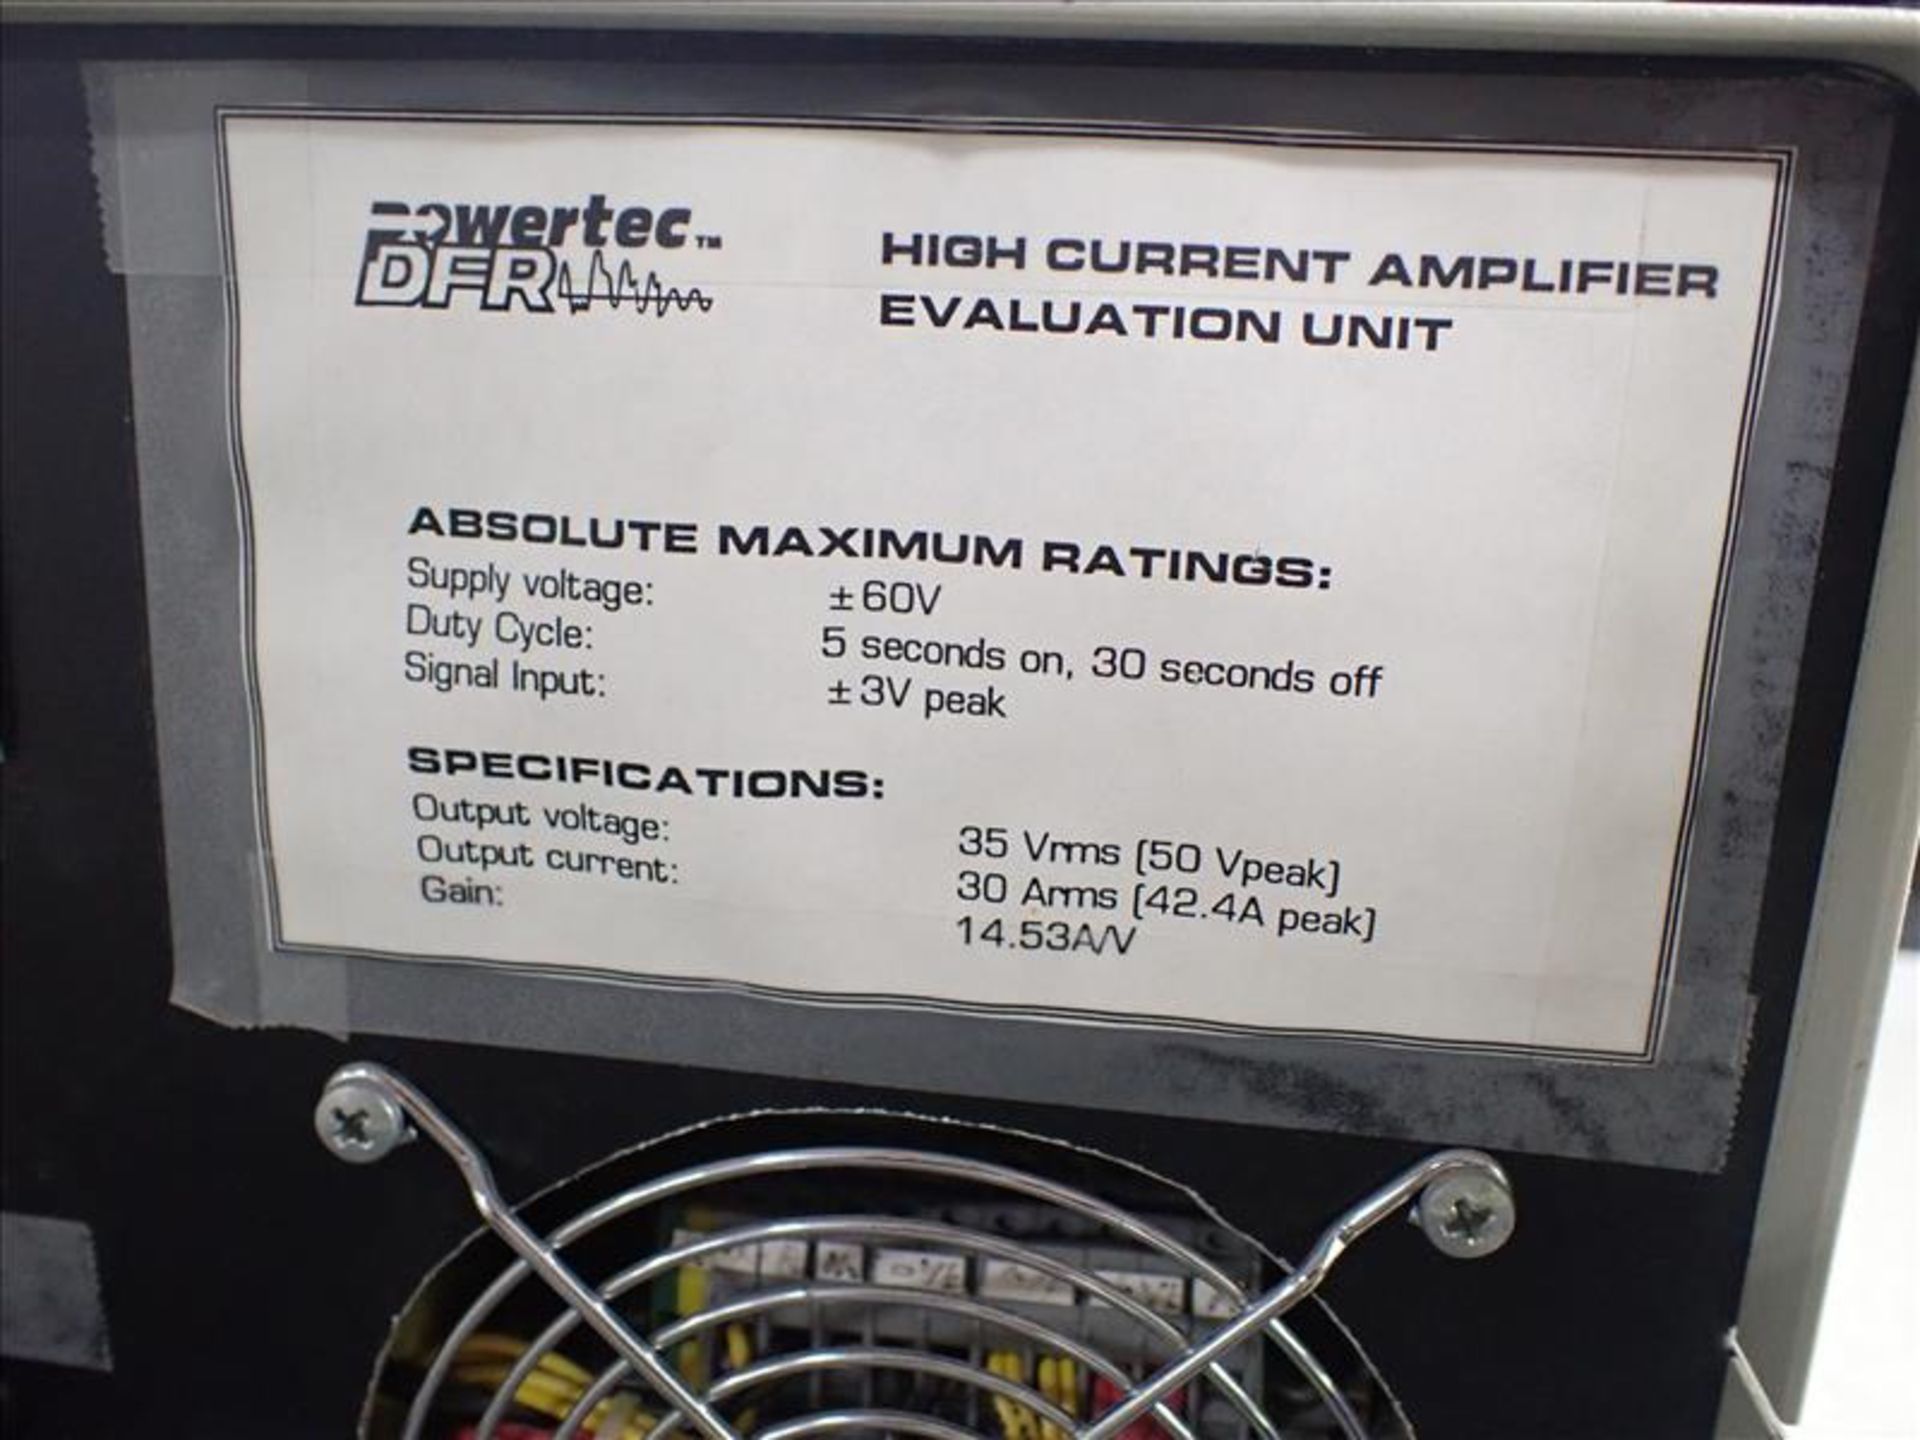 PowerTec DFR High Current Amplifier Evaluation Unit, ser. no. 9424 - Image 2 of 2